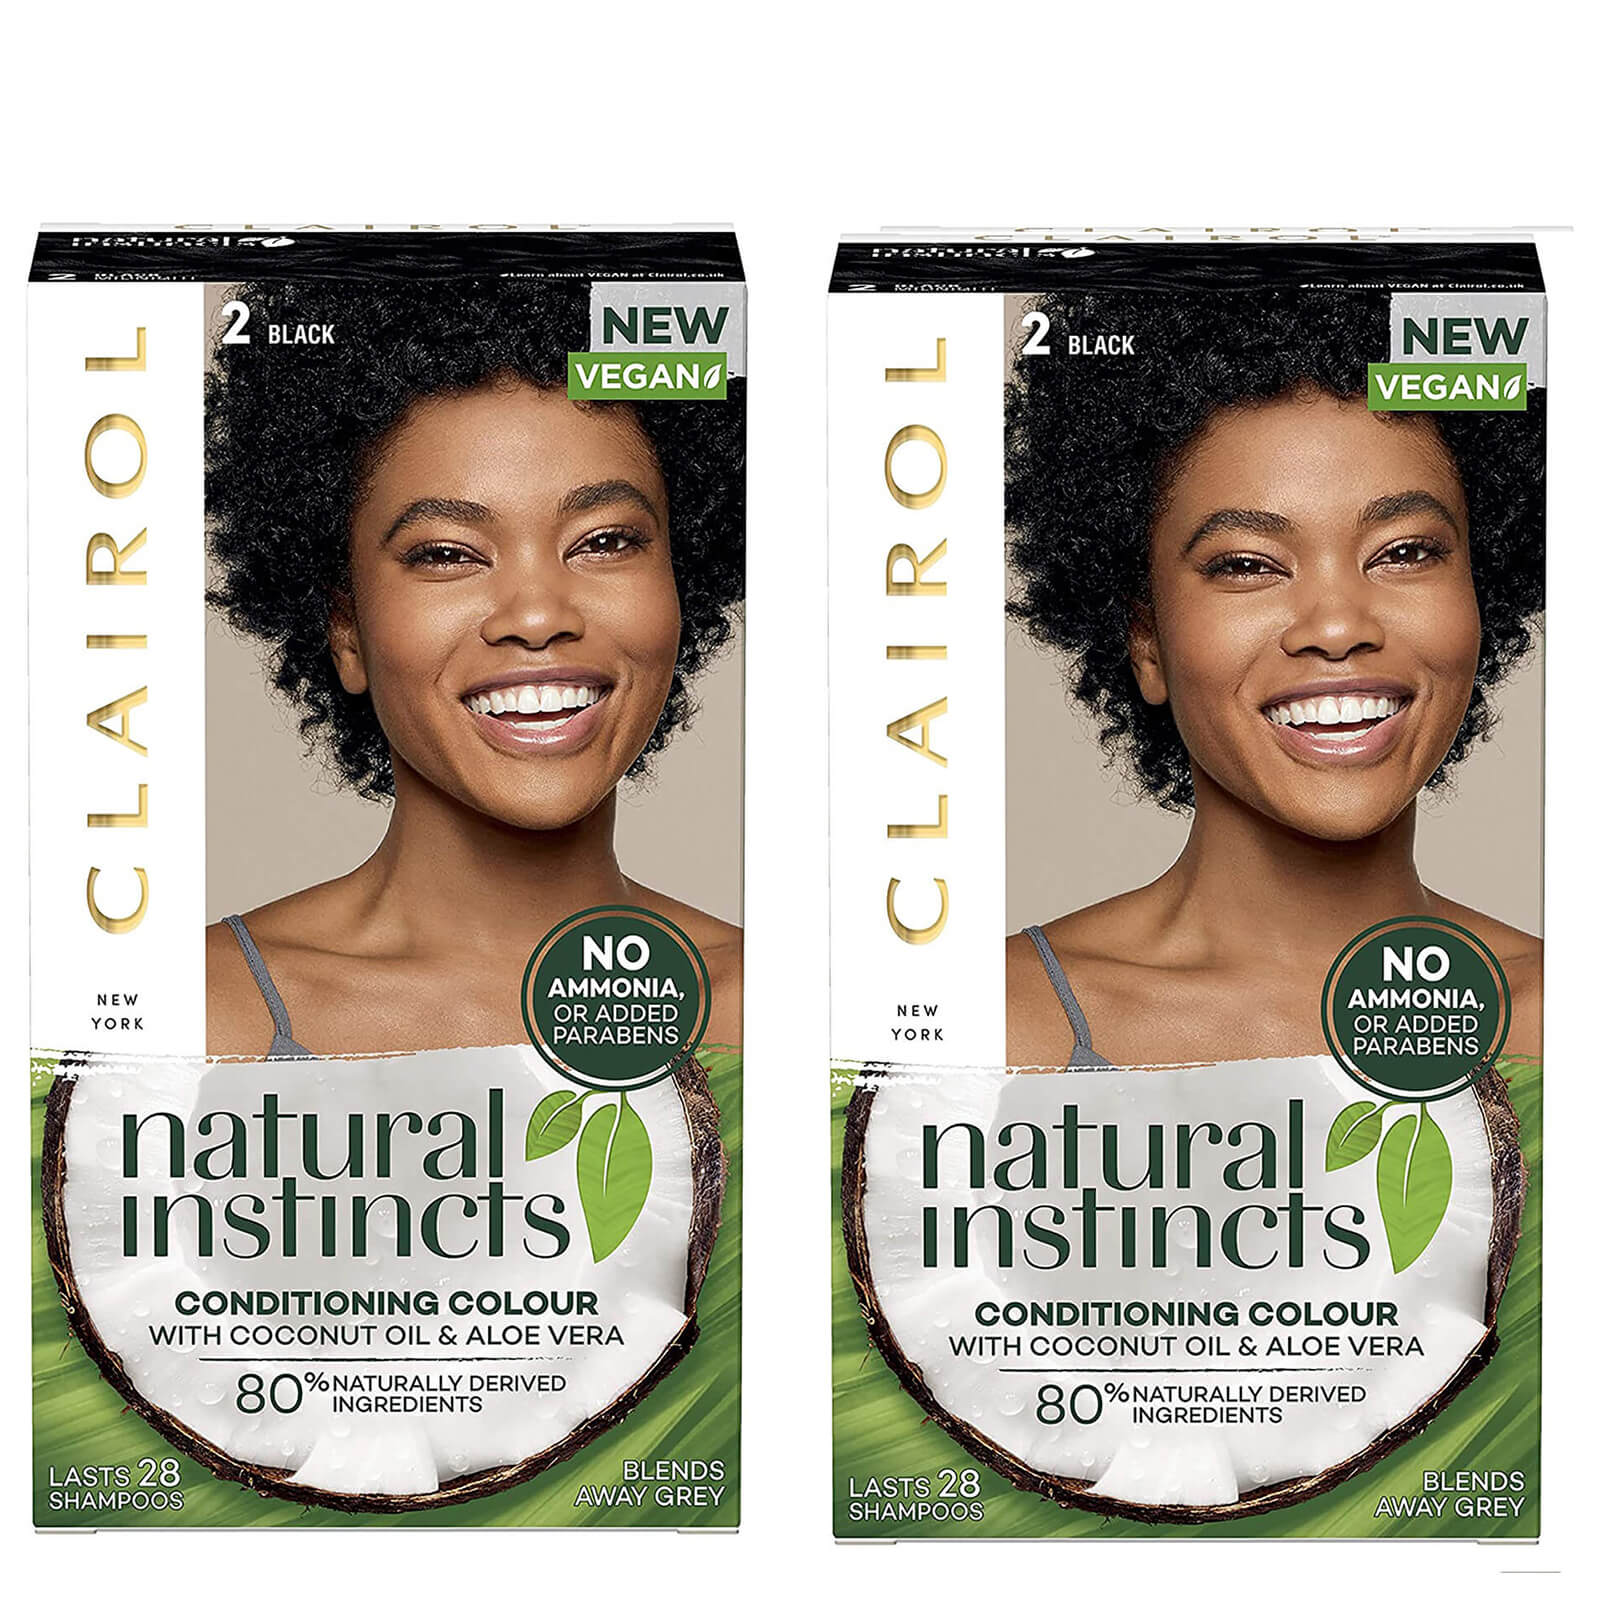 Clairol Natural Instincts Semi-Permanent No Ammonia Vegan Hair Dye Duo (Various Shades) - 2 Black